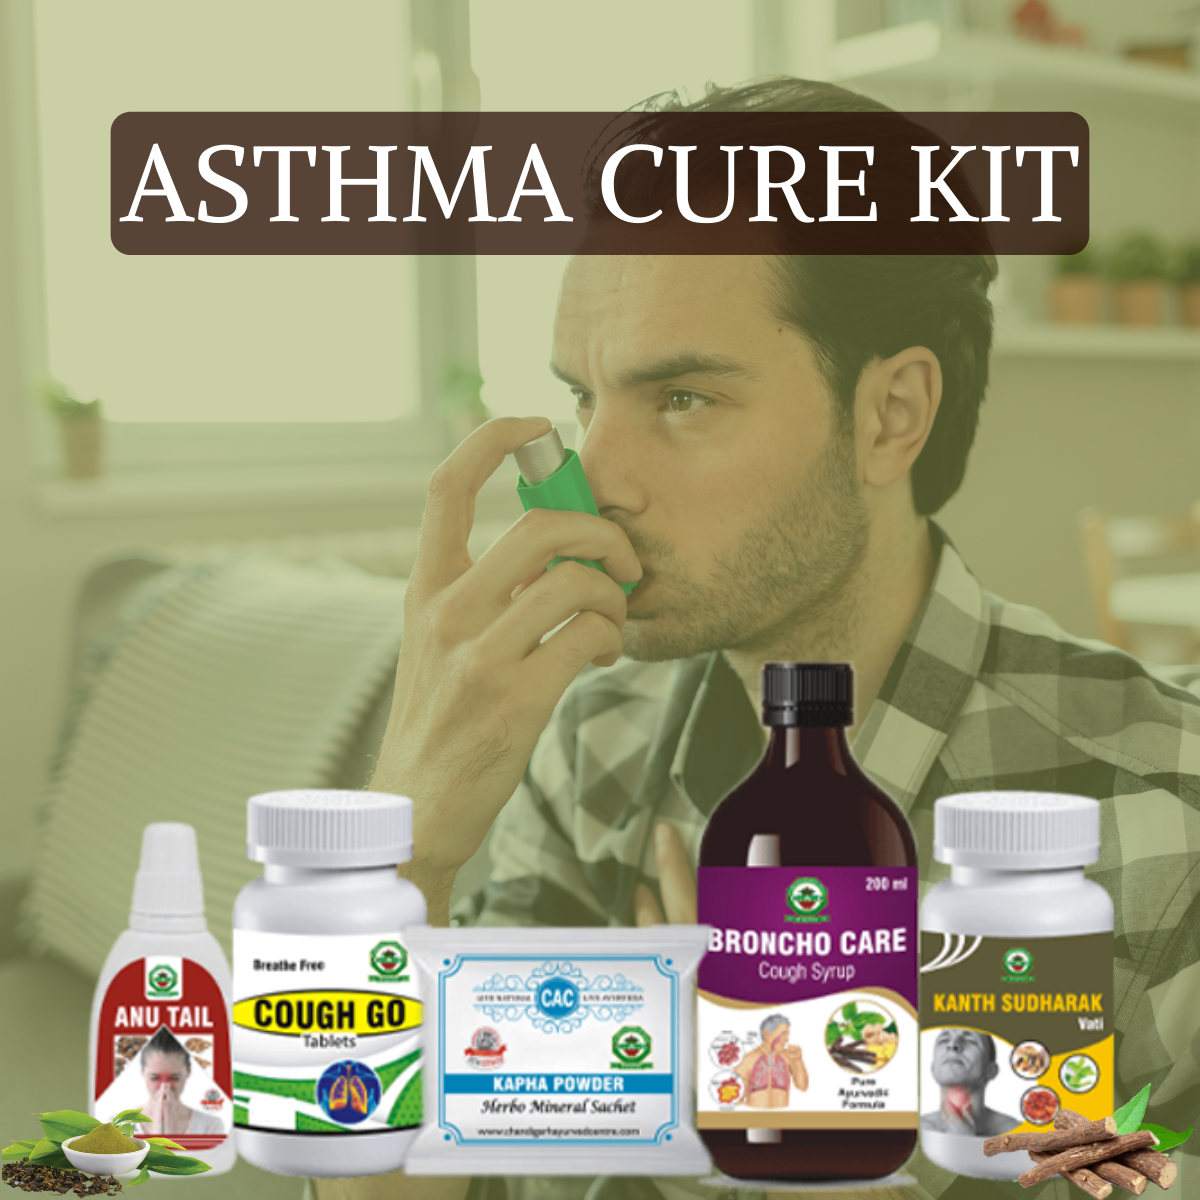 Asthma Cure Kit